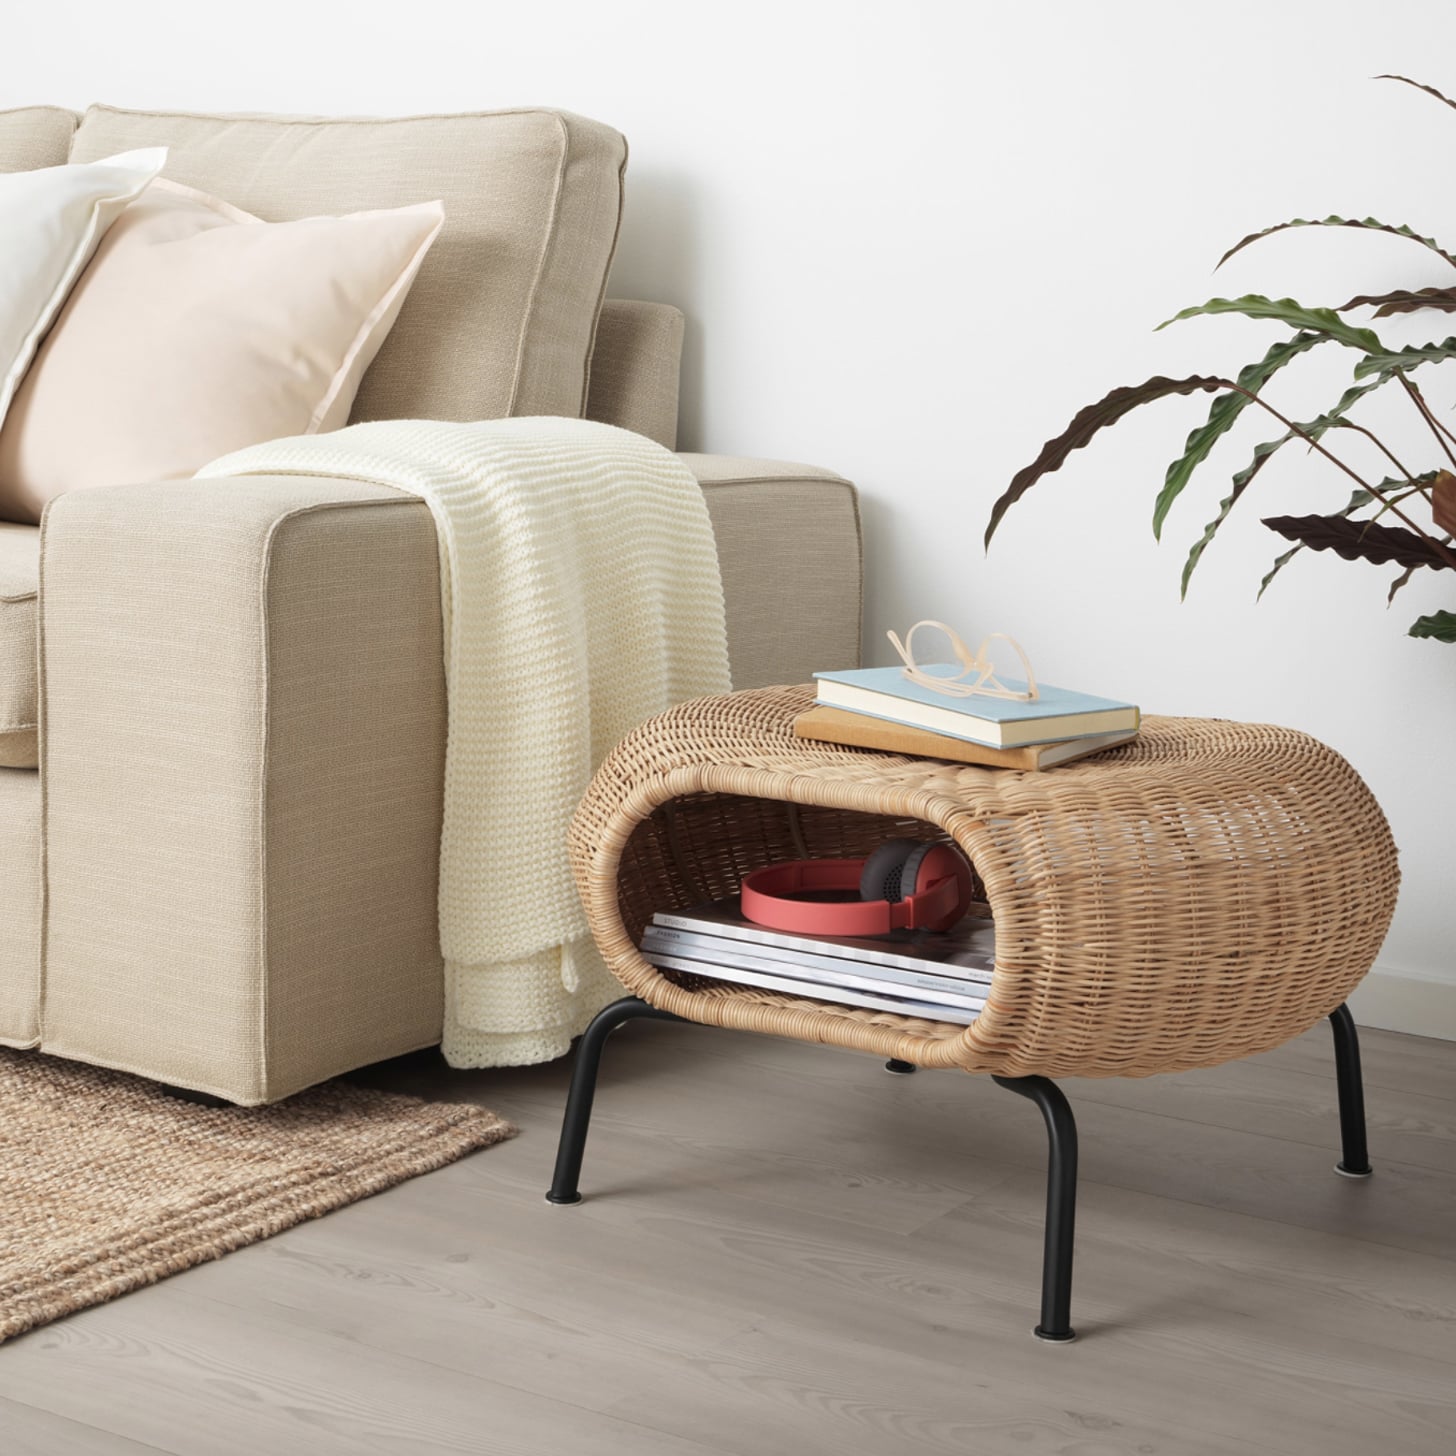 Best Ikea Living Room Furniture With Storage POPSUGAR Home Australia